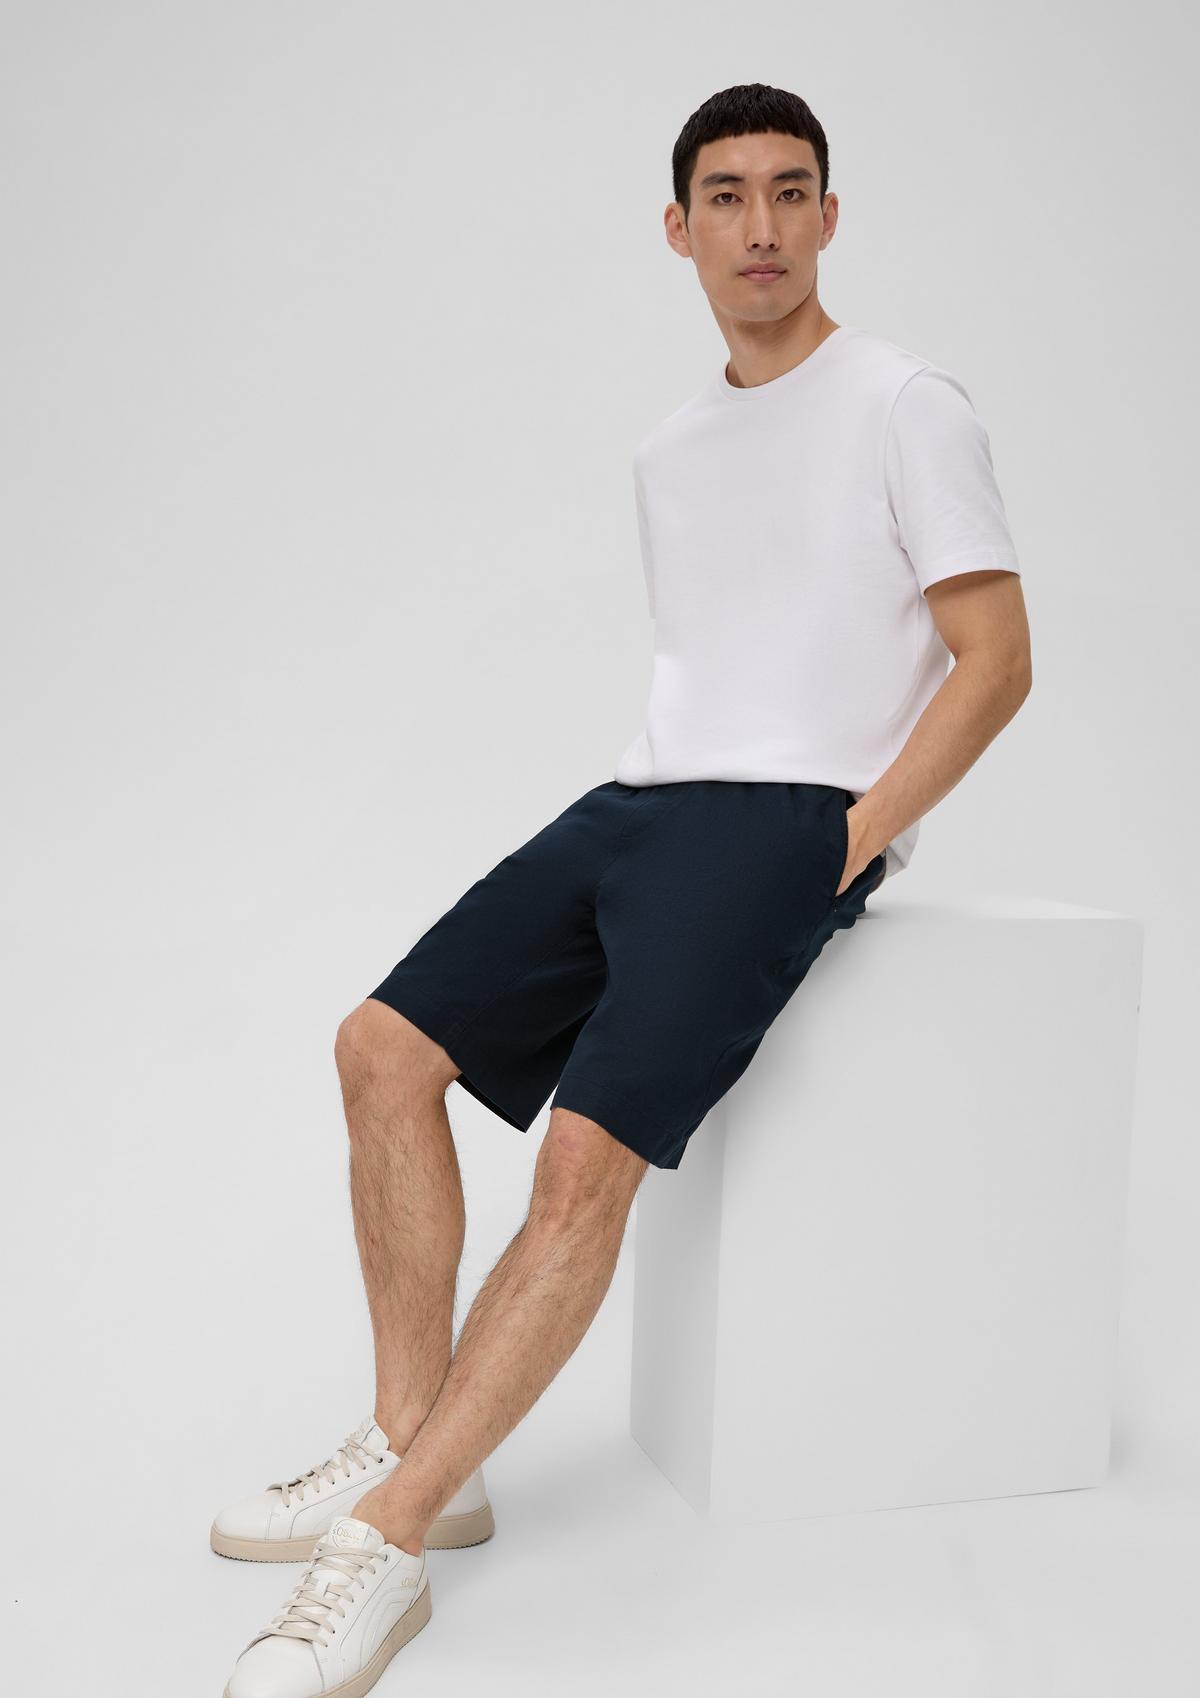 Bermuda shorts in blended linen